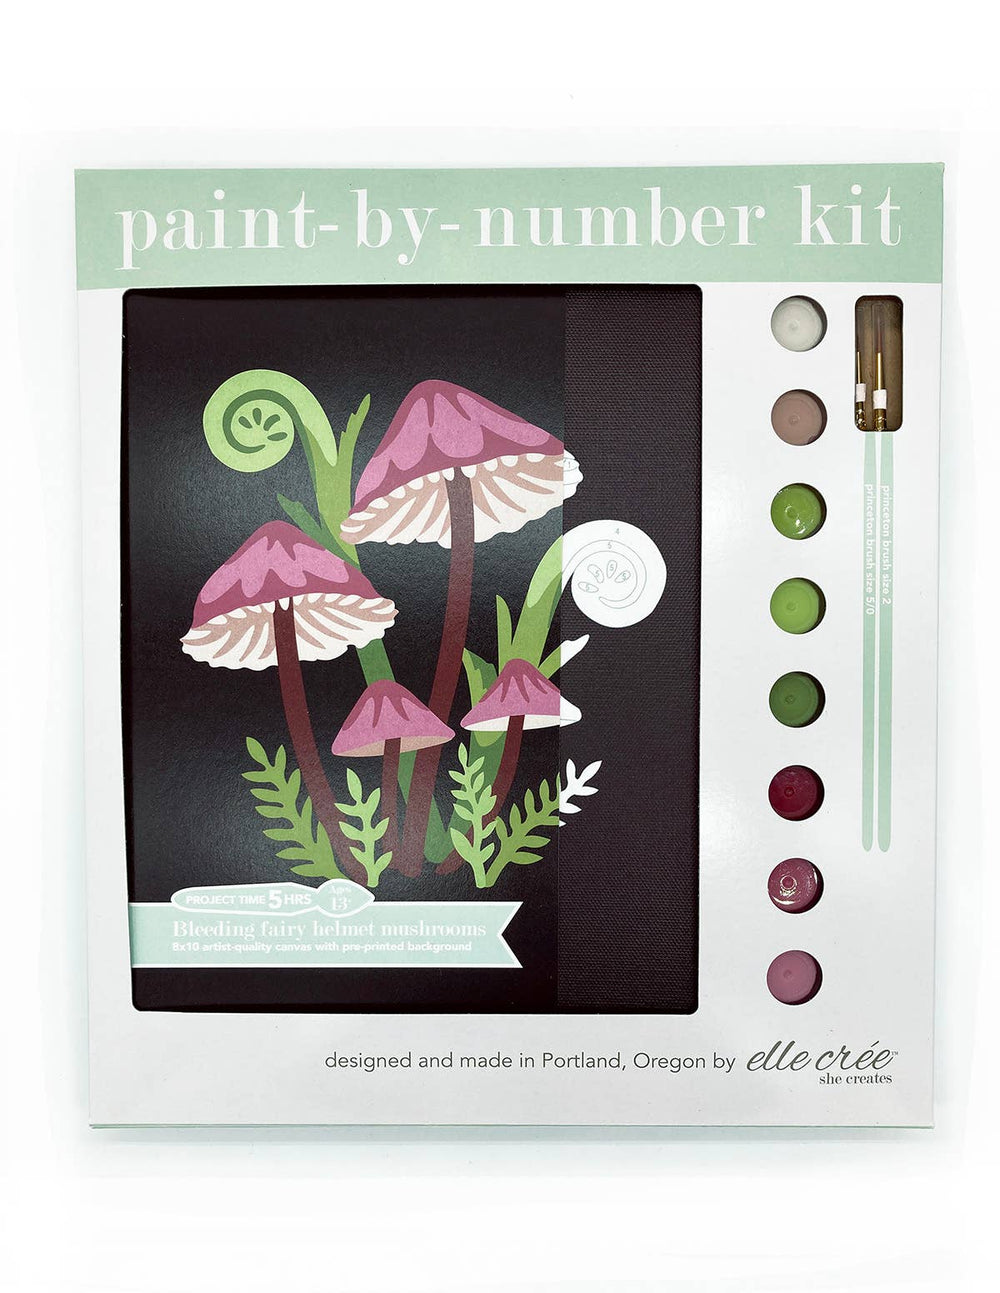 Bleeding Fairy Helmet Mushrooms Paint-by-Number Kit